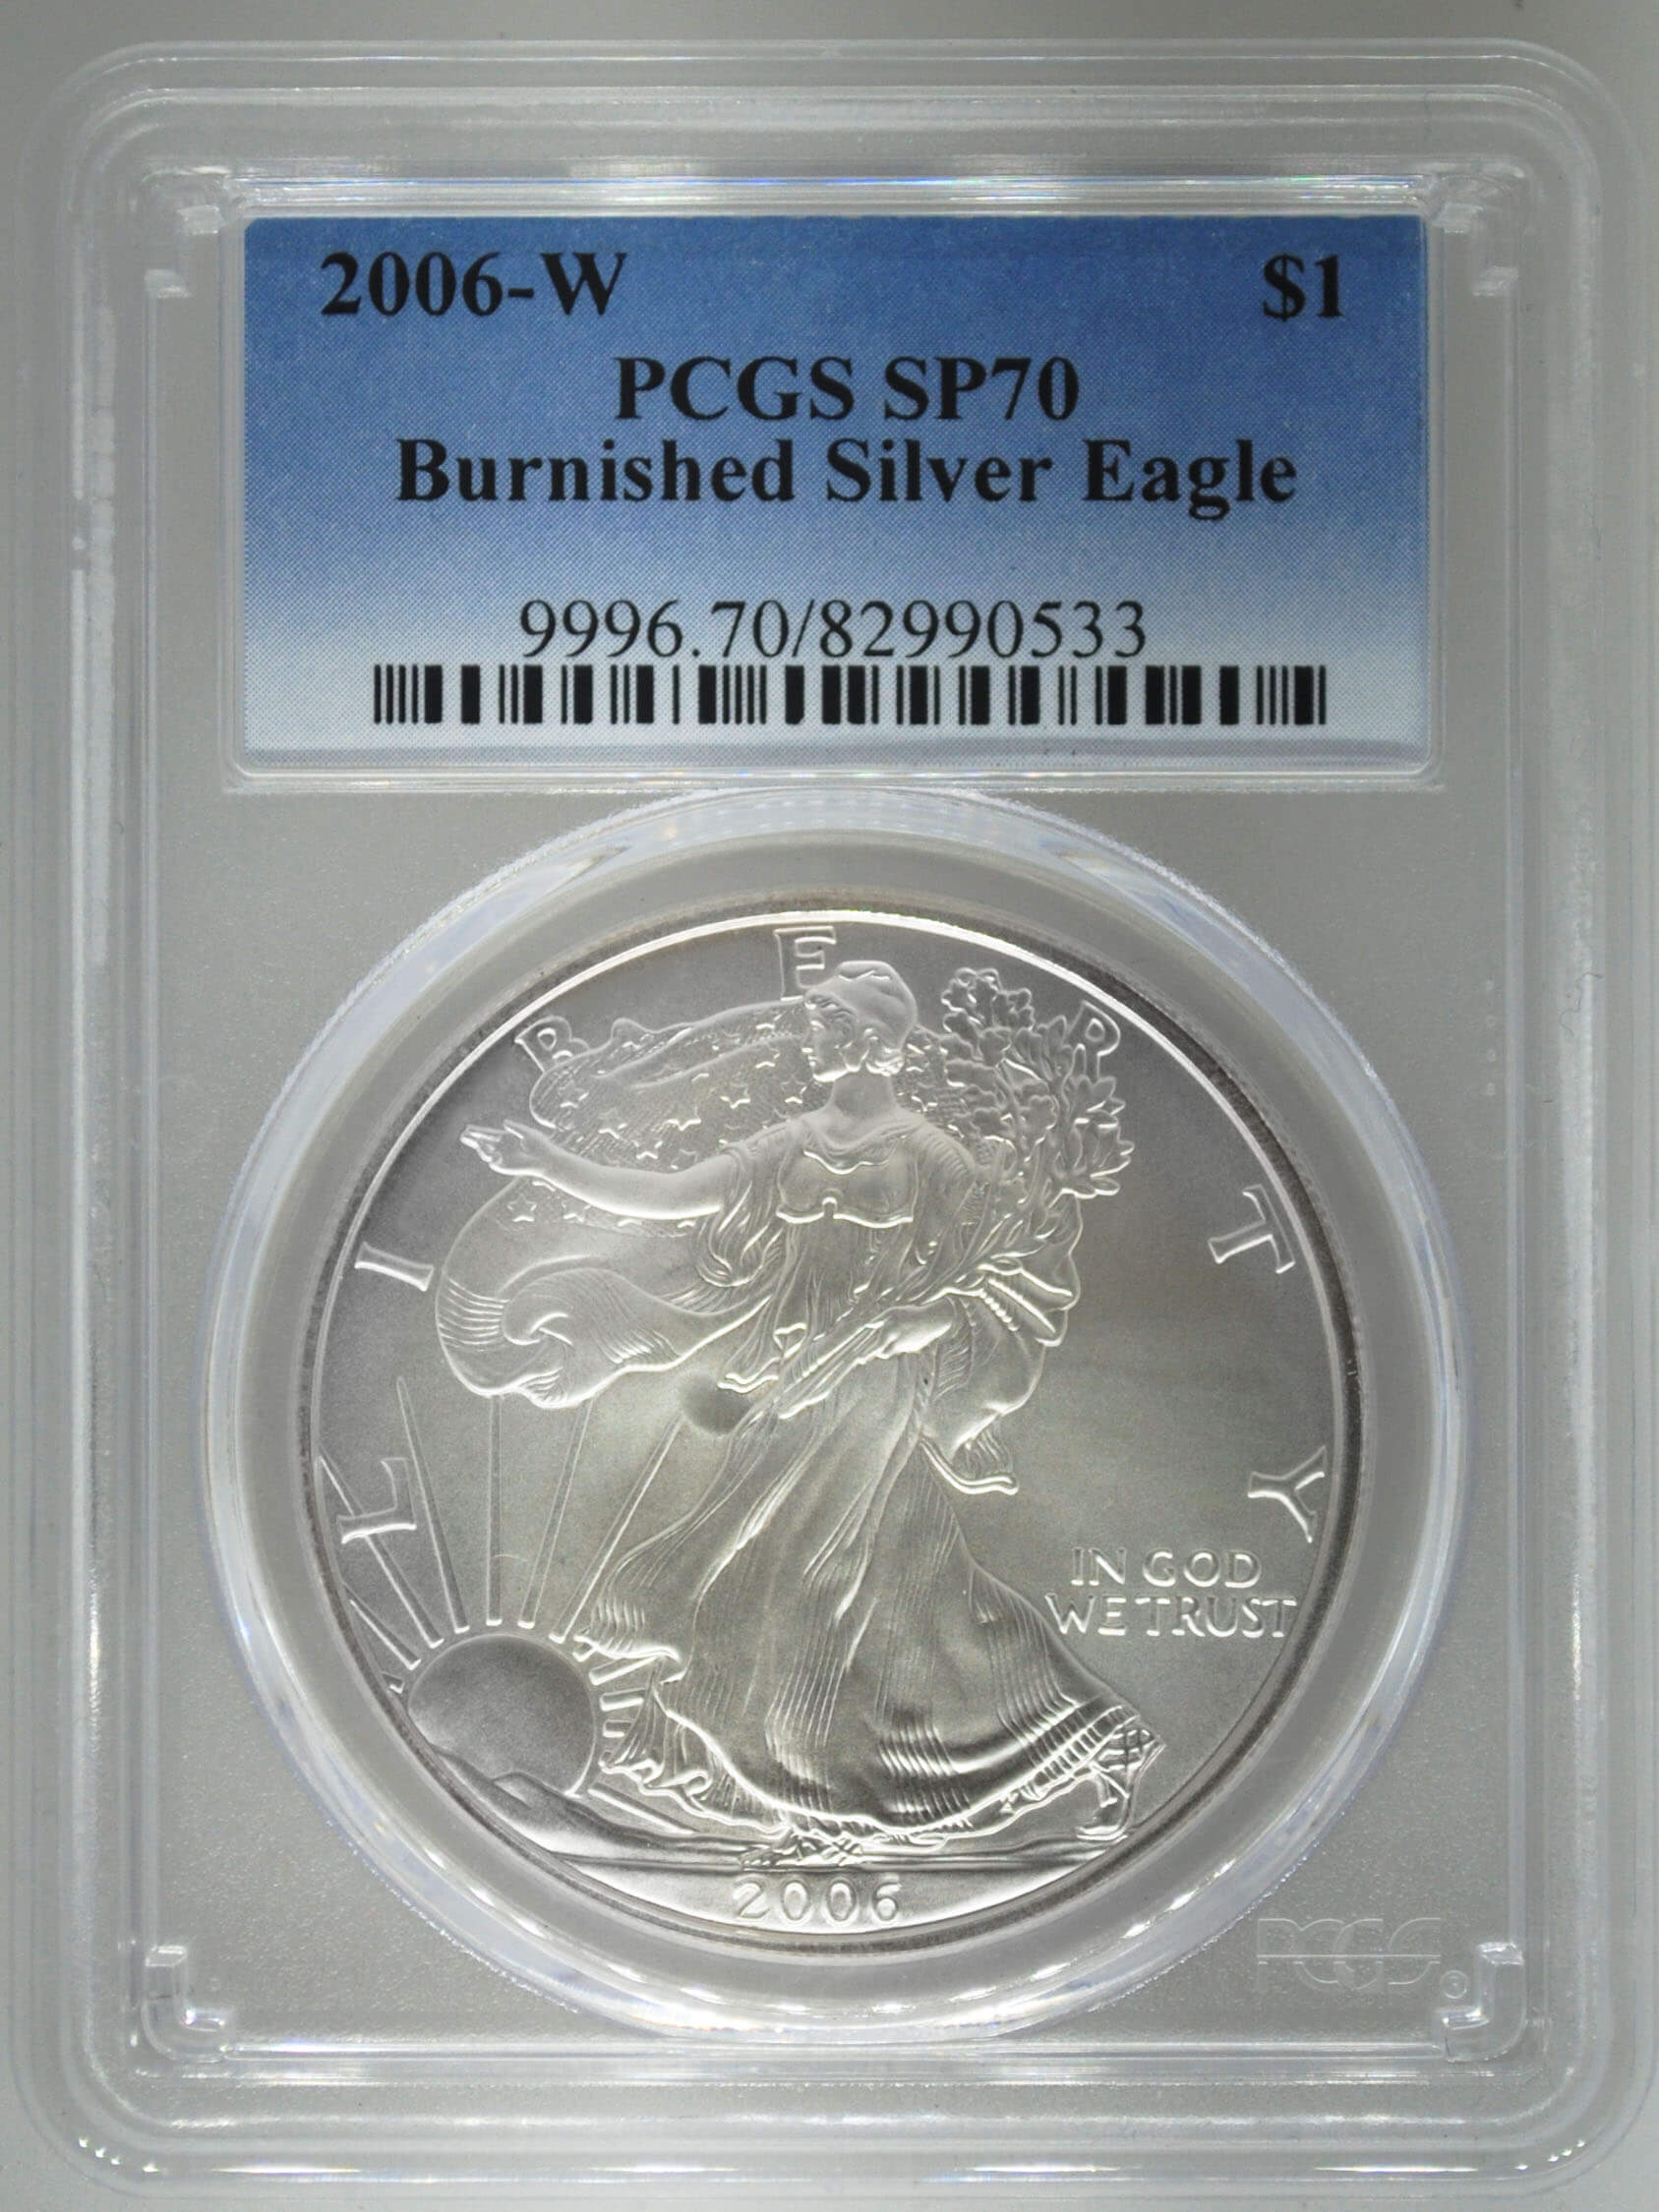 2006-W PCGS SP70 Burnished Silver Eagle 1 oz Coin - Enterprise Bullion